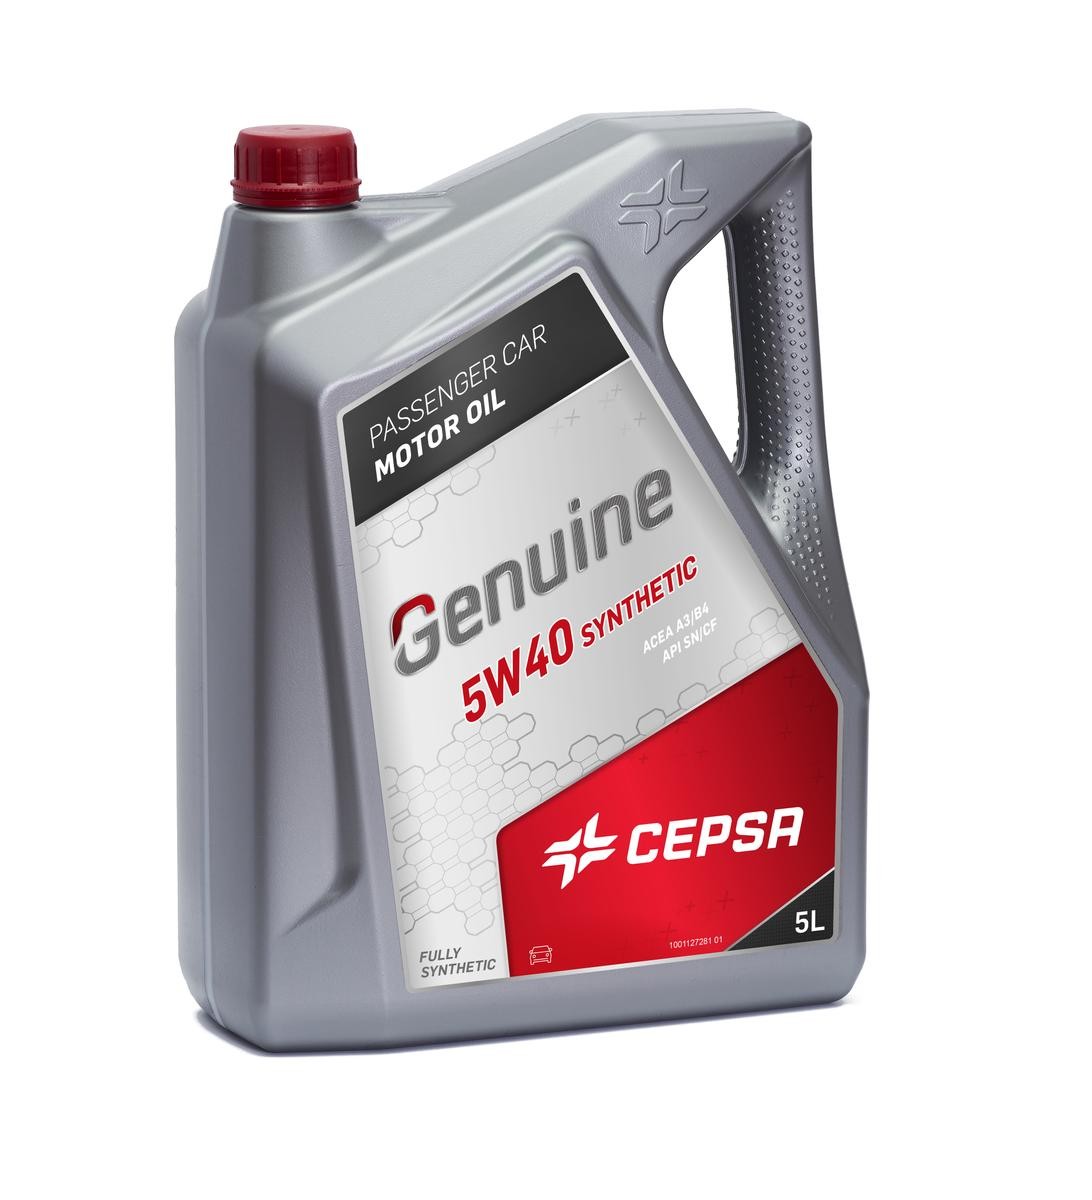 Buy Engine oil CEPSA petrol 512553090 GENUINE, SYNTHETIC 5W-40, 5l, Synthetic, Full Synthetic Oil